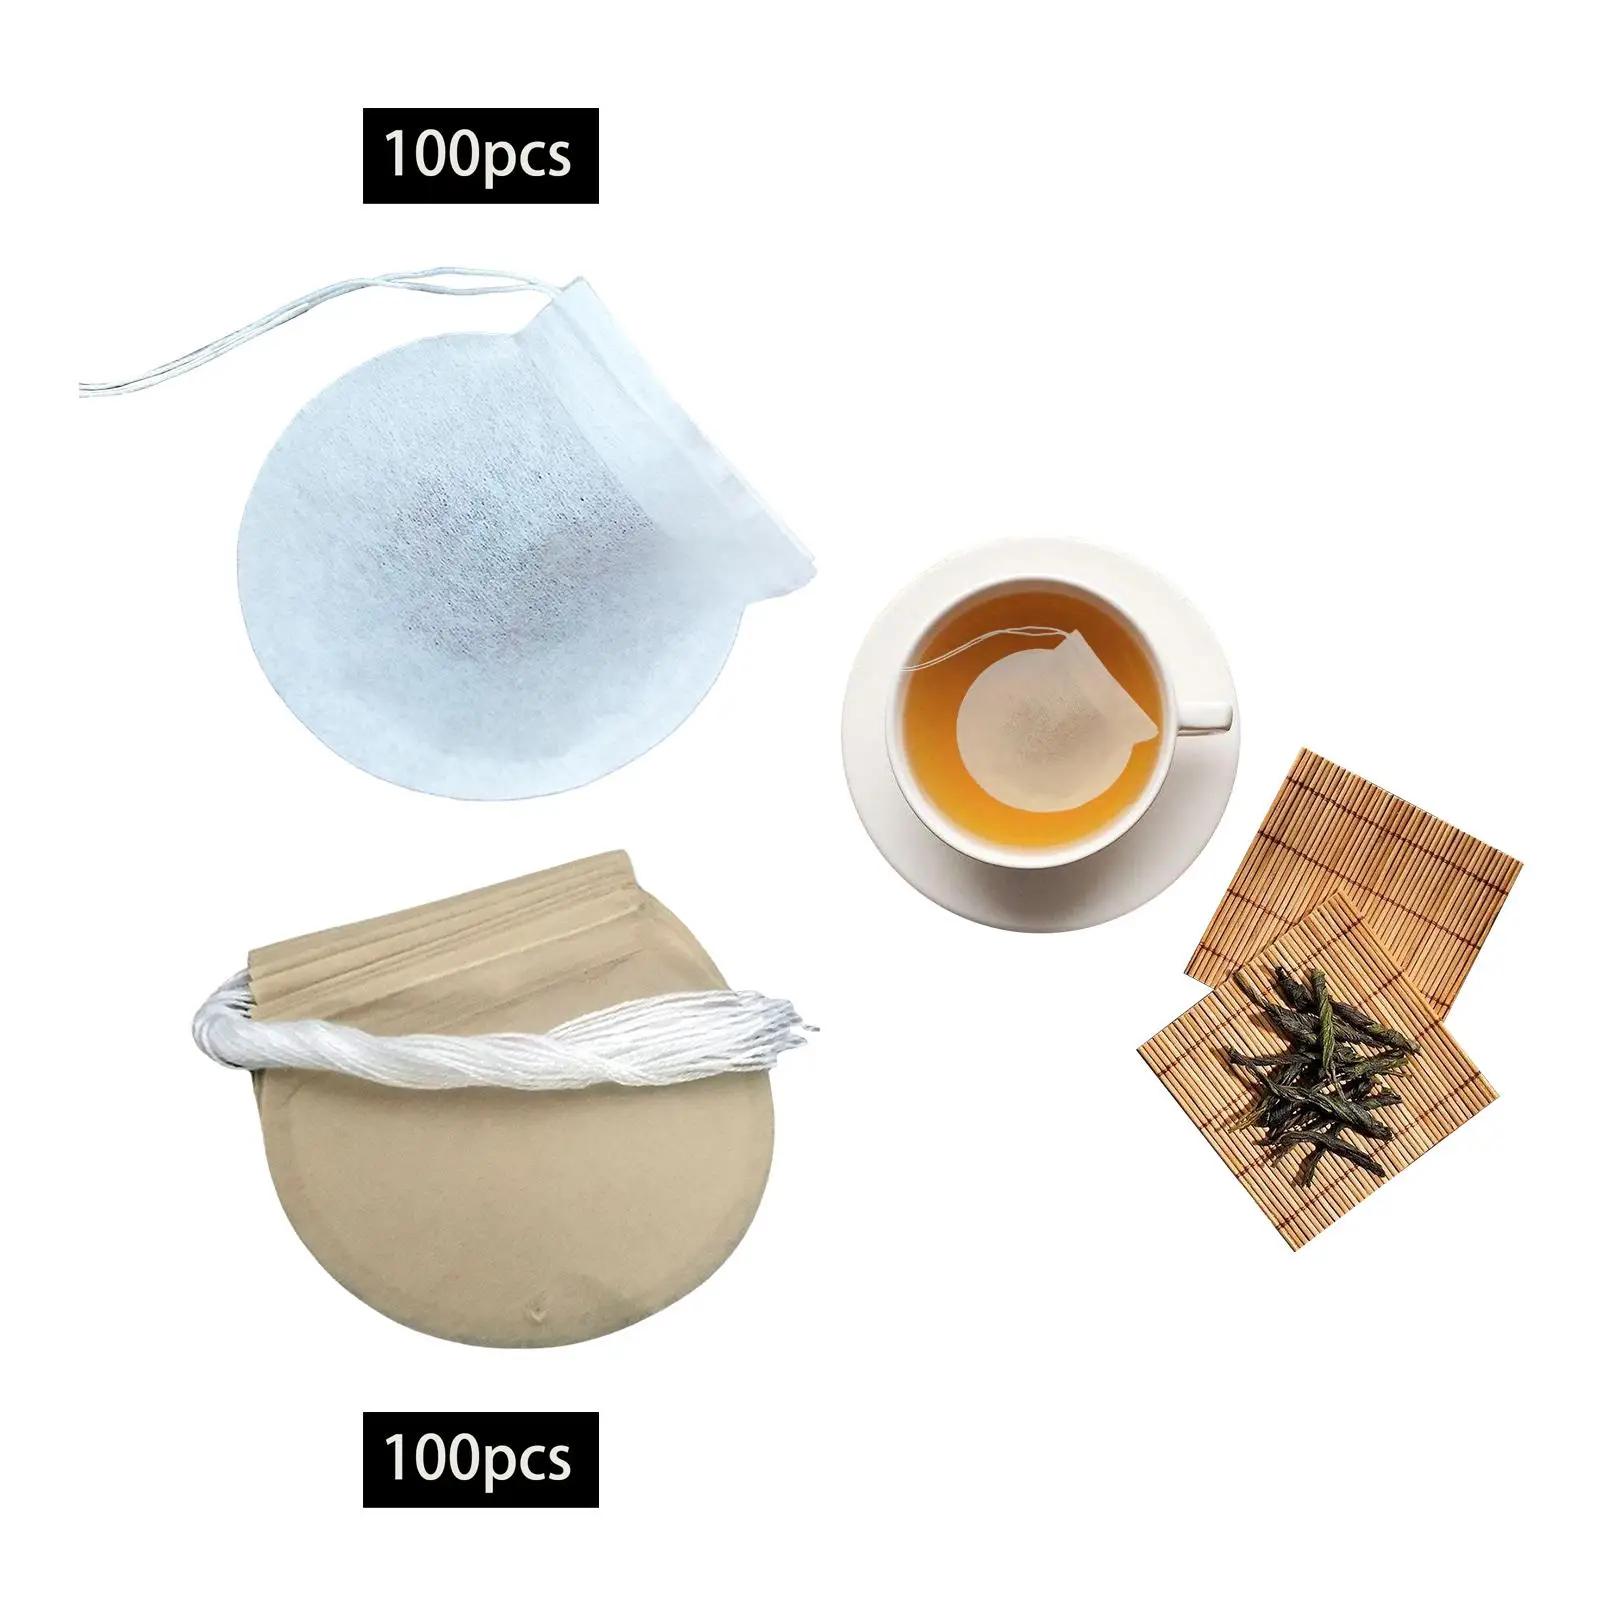 100 Pieces Tea Filter Bags Pepper Spices Tea Infuser Tea Leaf Filter Bags